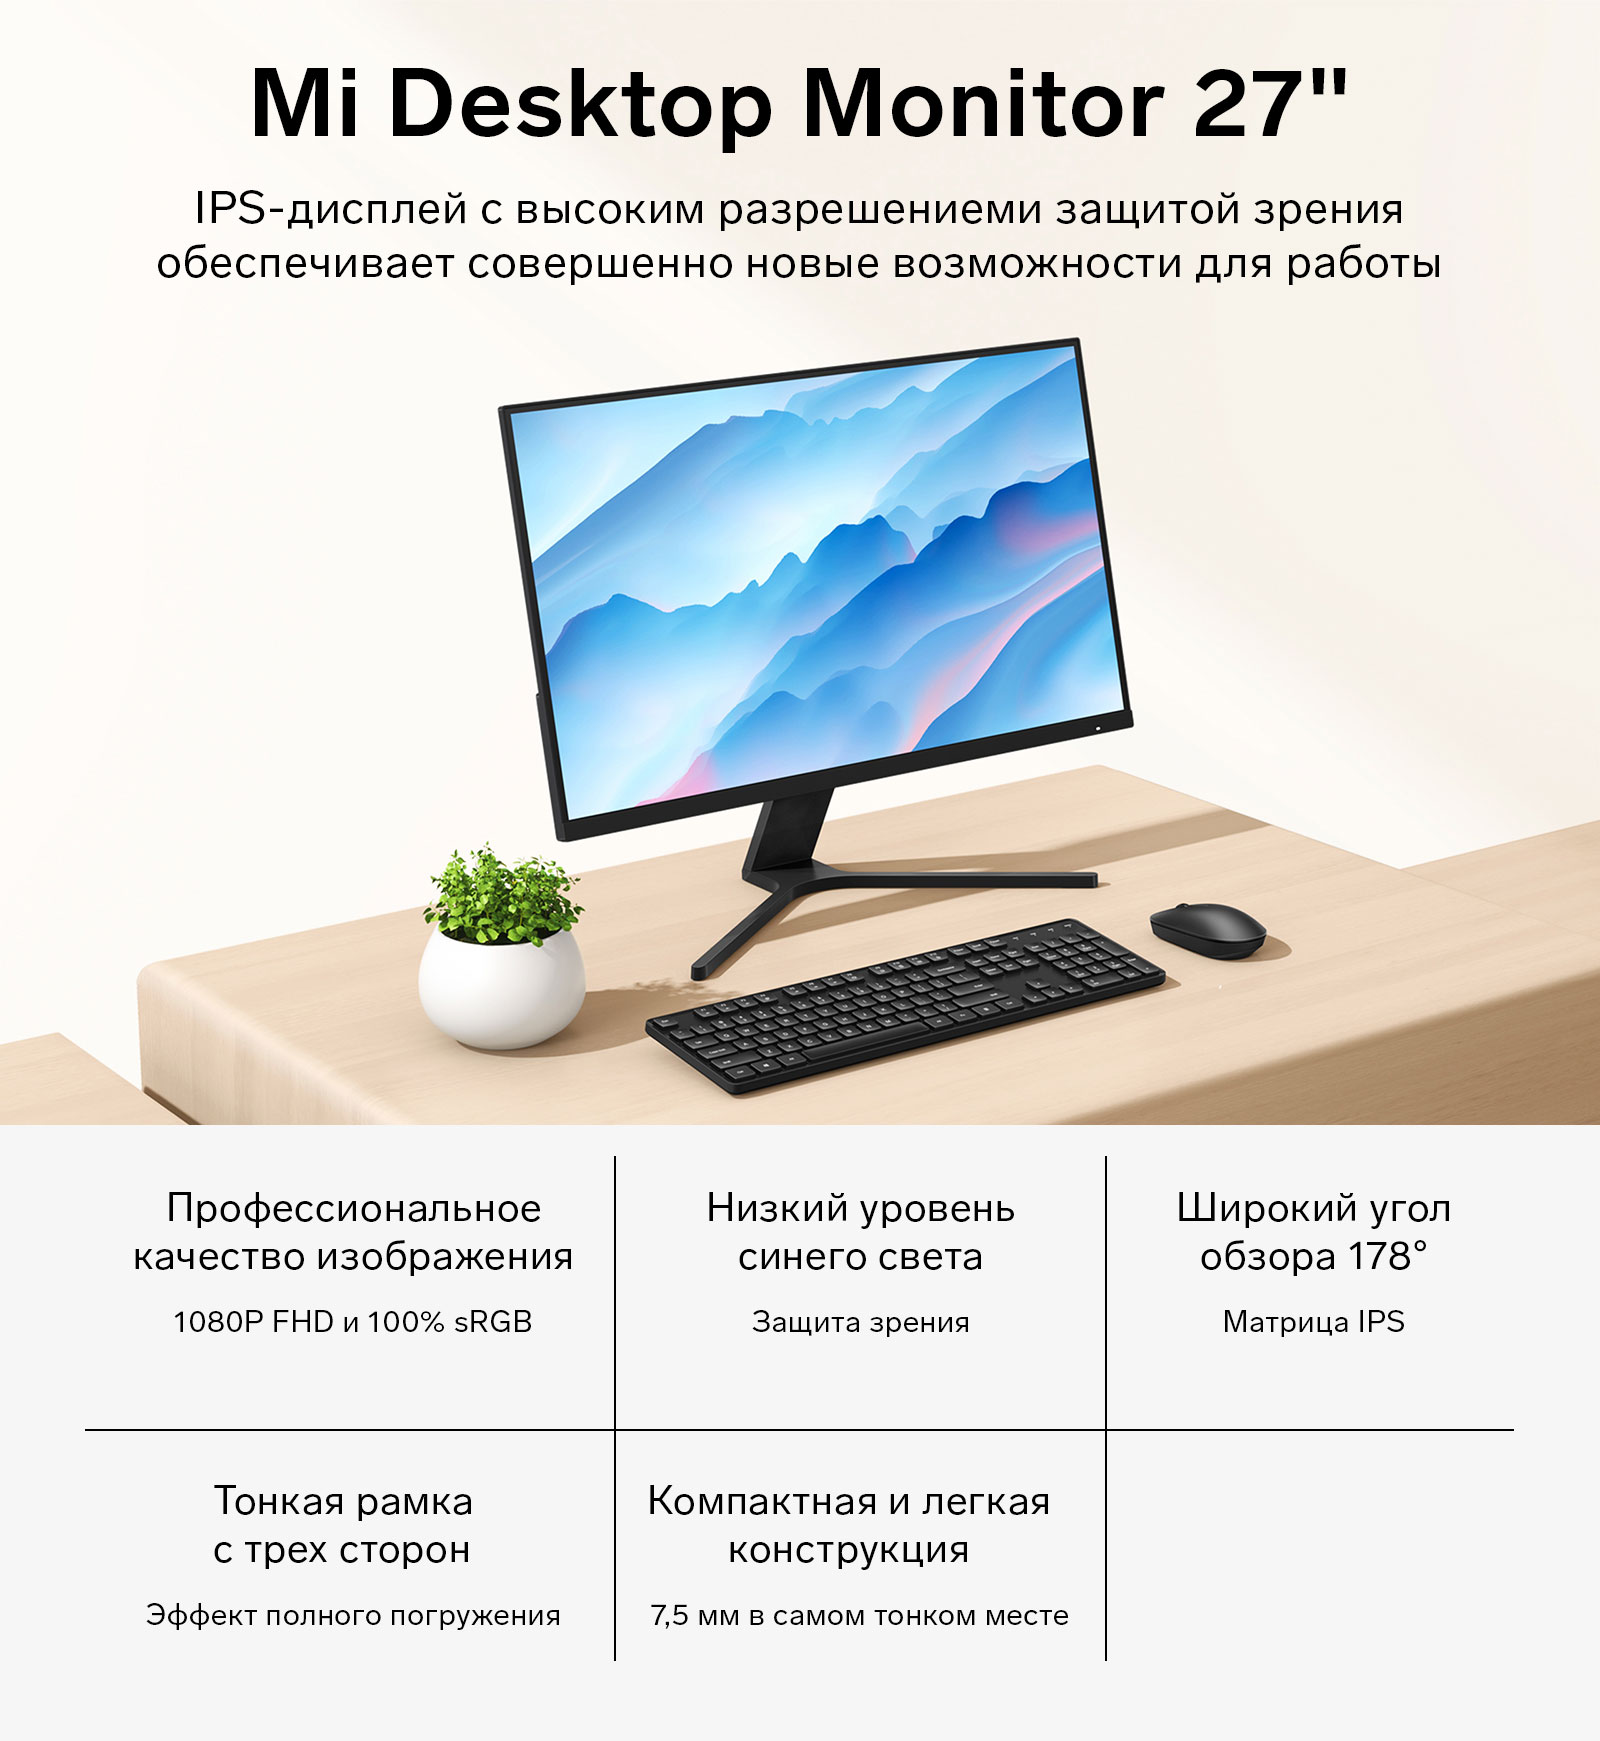 Mi desktop Monitor 27